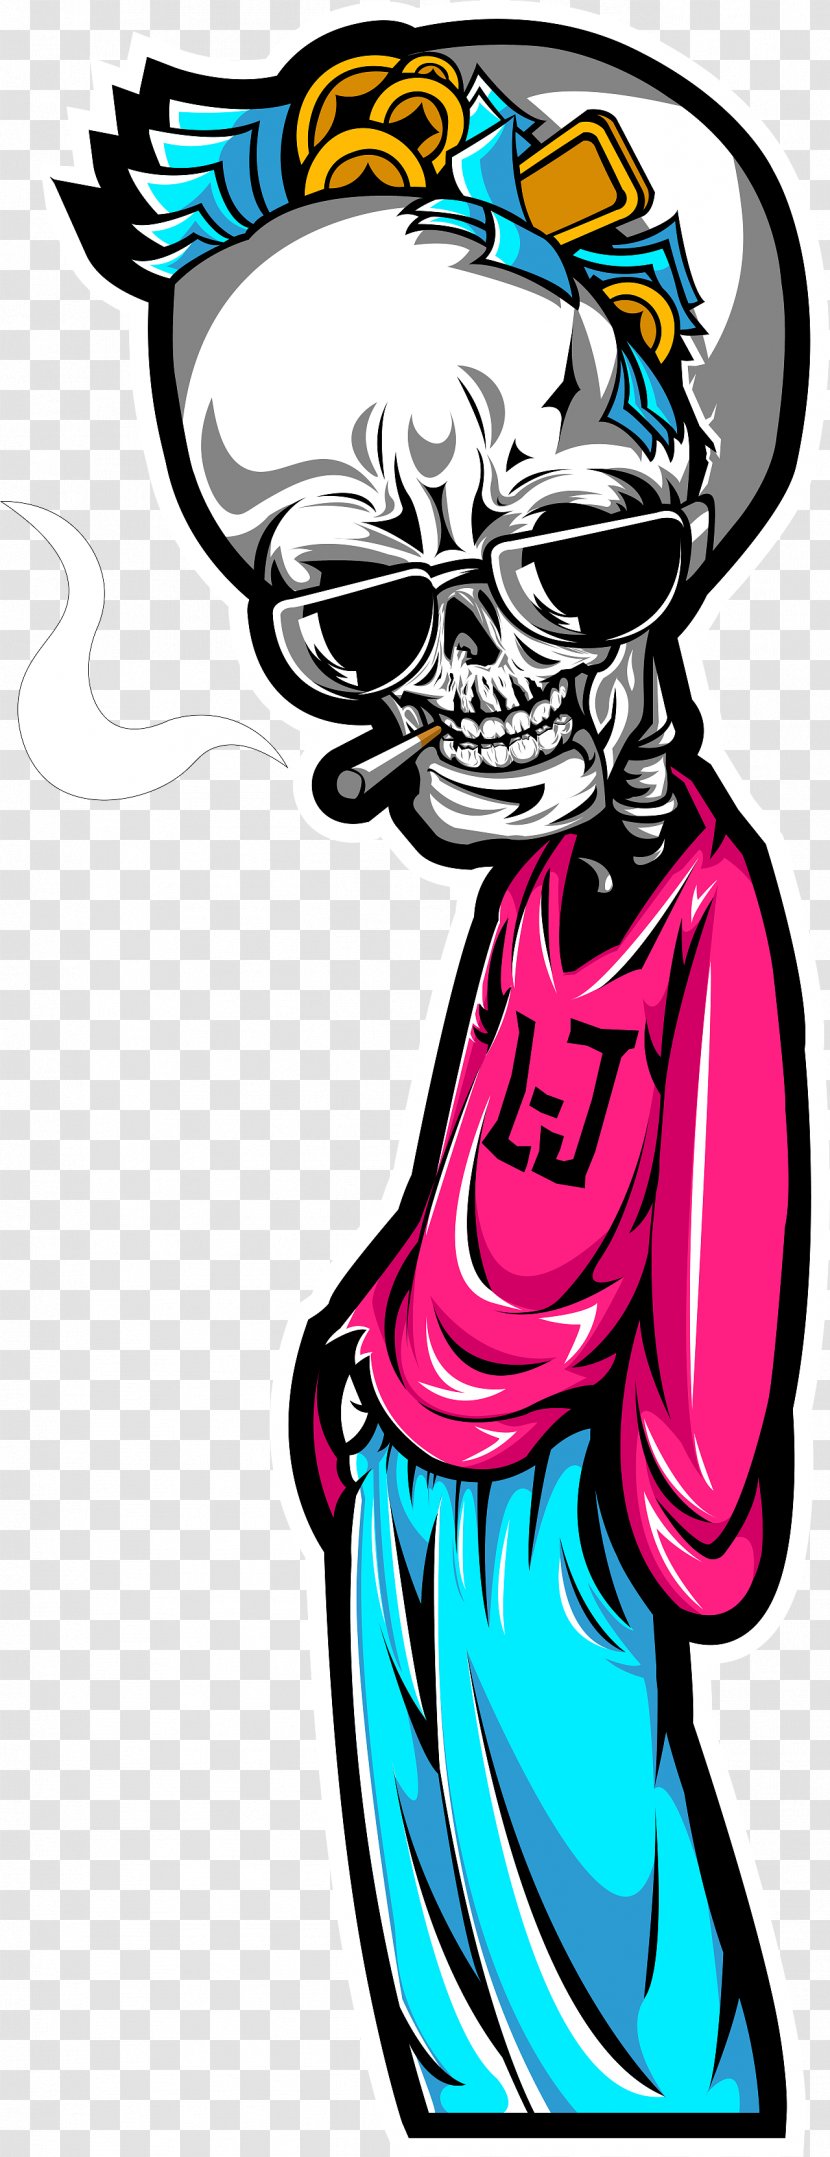 Clip Art Illustration Graphic Design Cartoon Character - Fictional - Bonehead Banner Transparent PNG